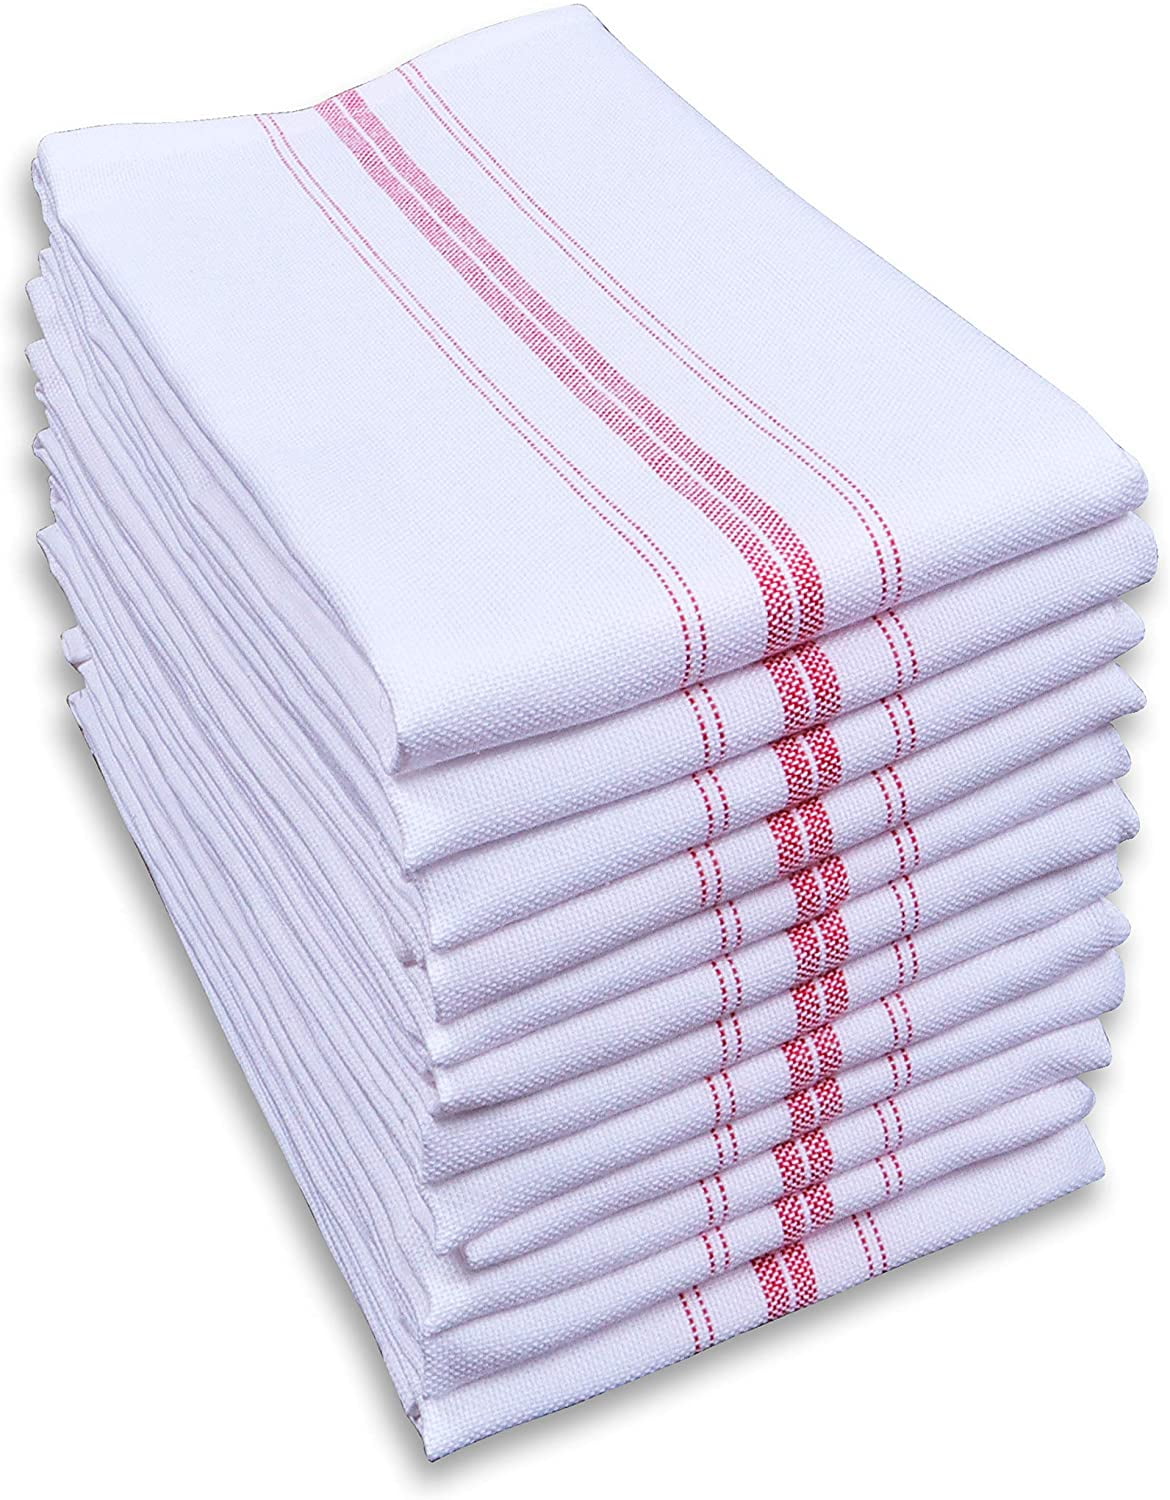 Let's Flamingle Dish Towels Set of 2 New Flamingos Striped Cotton Kitchen Tea 